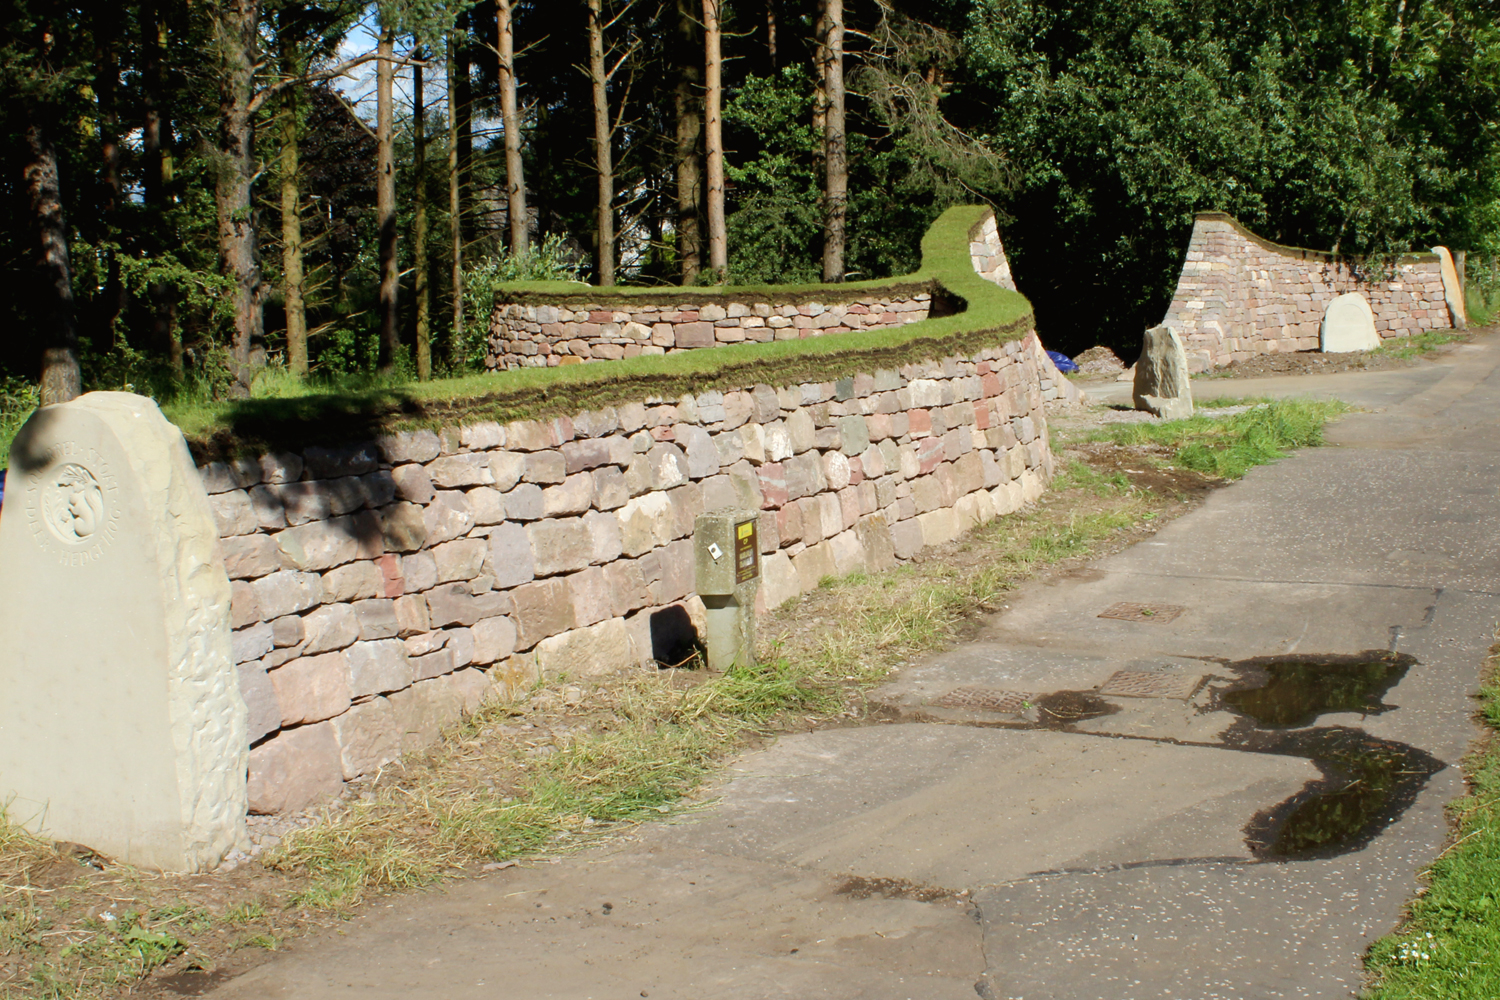 Dry stone entrance way